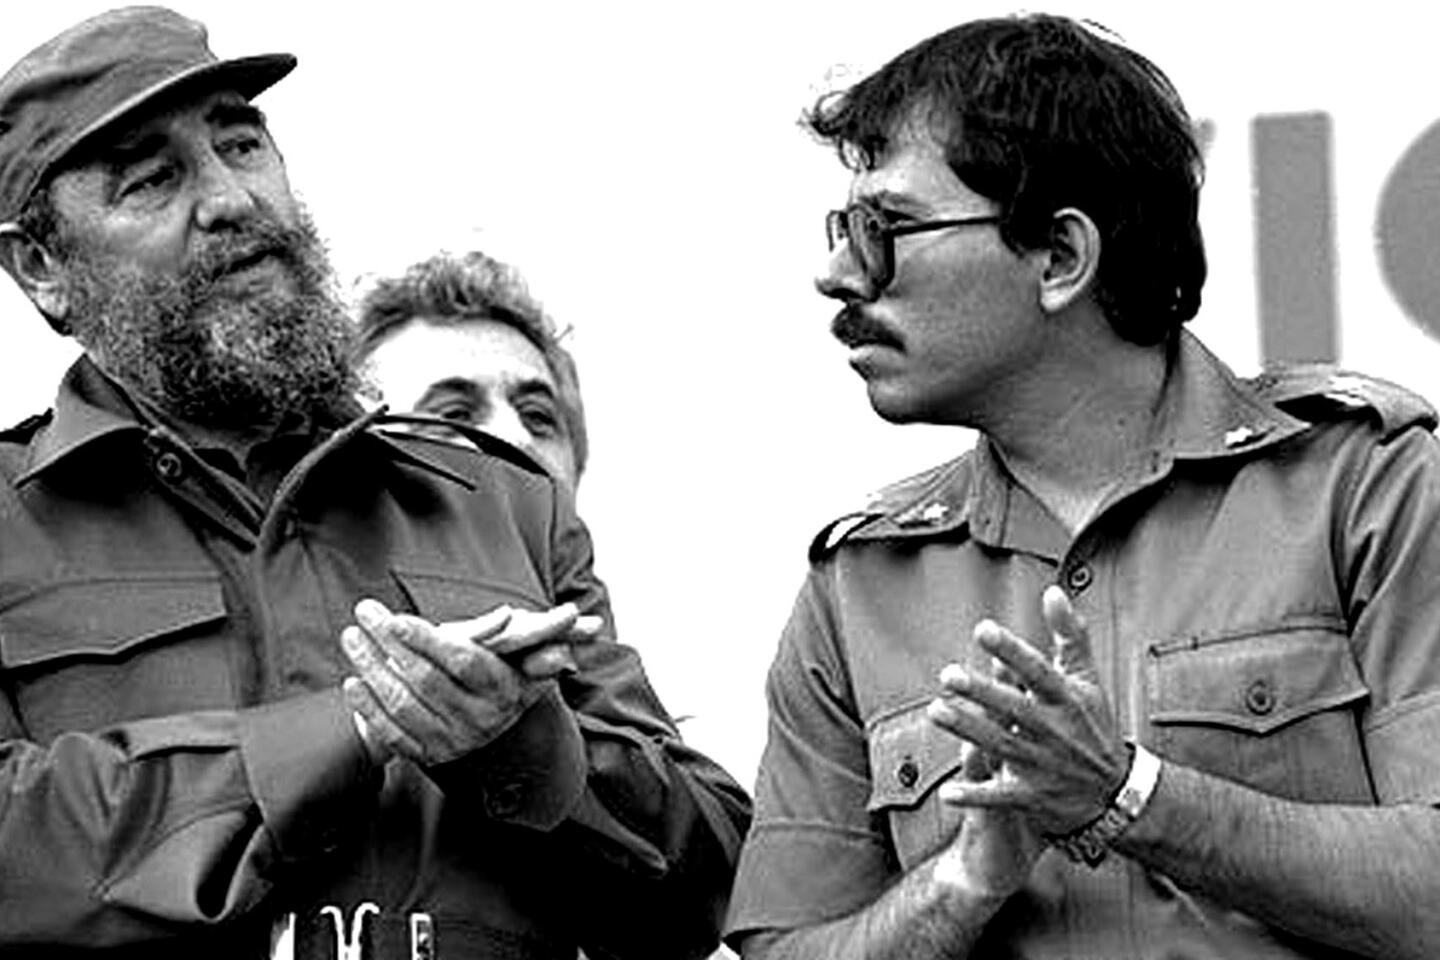 Fidel Castro, Cuban Revolutionary - The New York Times